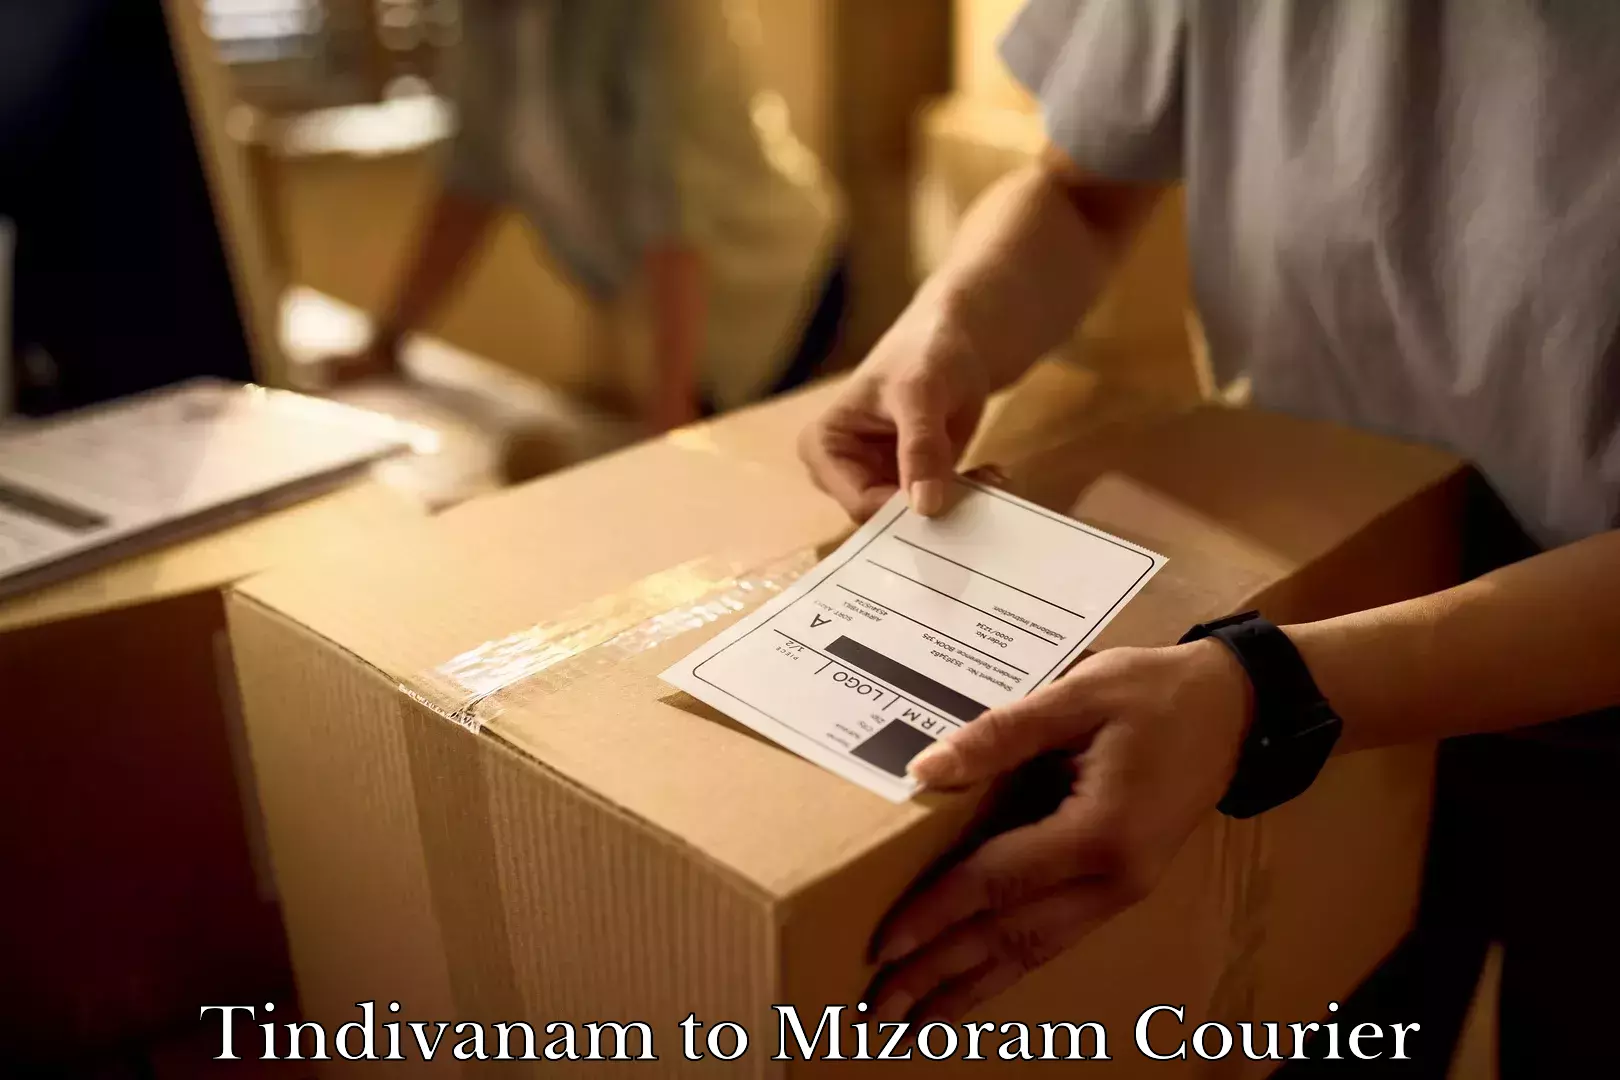 Furniture delivery service Tindivanam to Darlawn